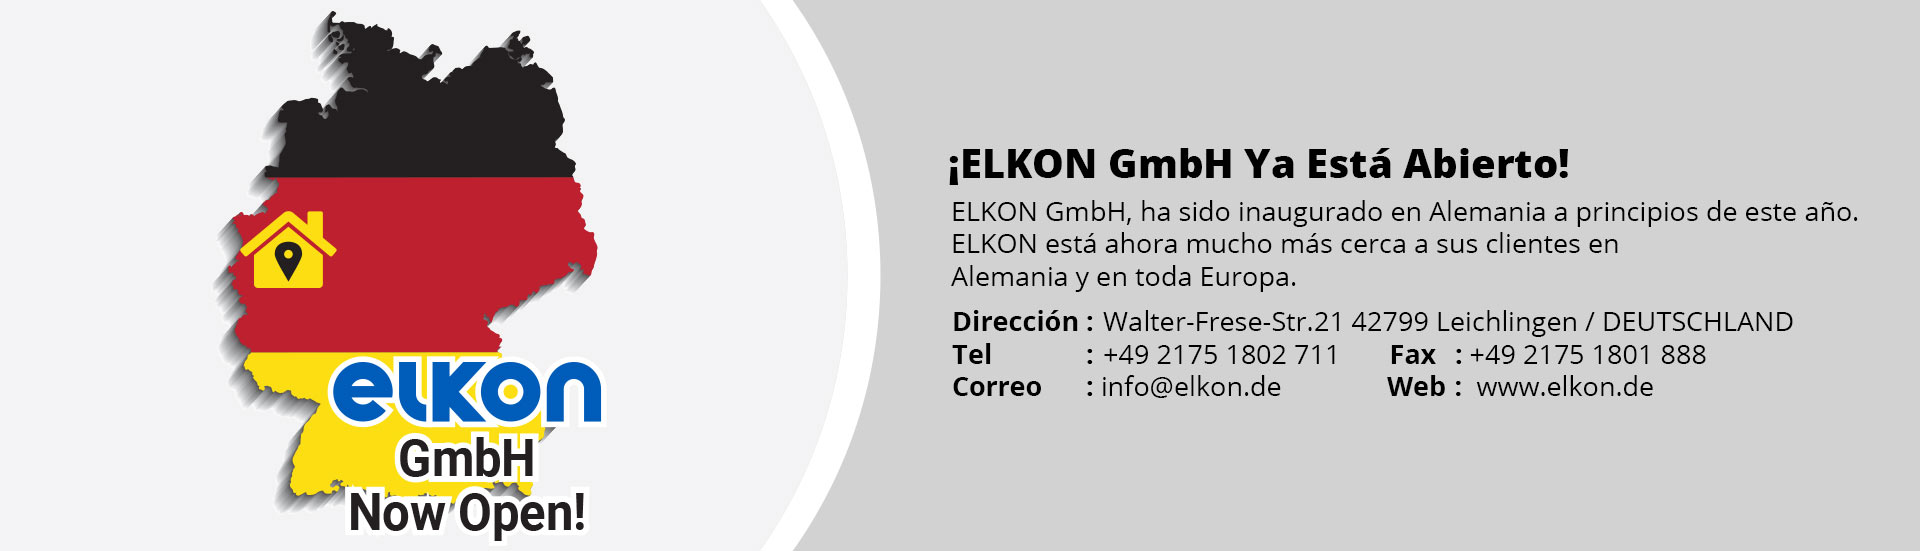 2-Elkon-Gmbh_1